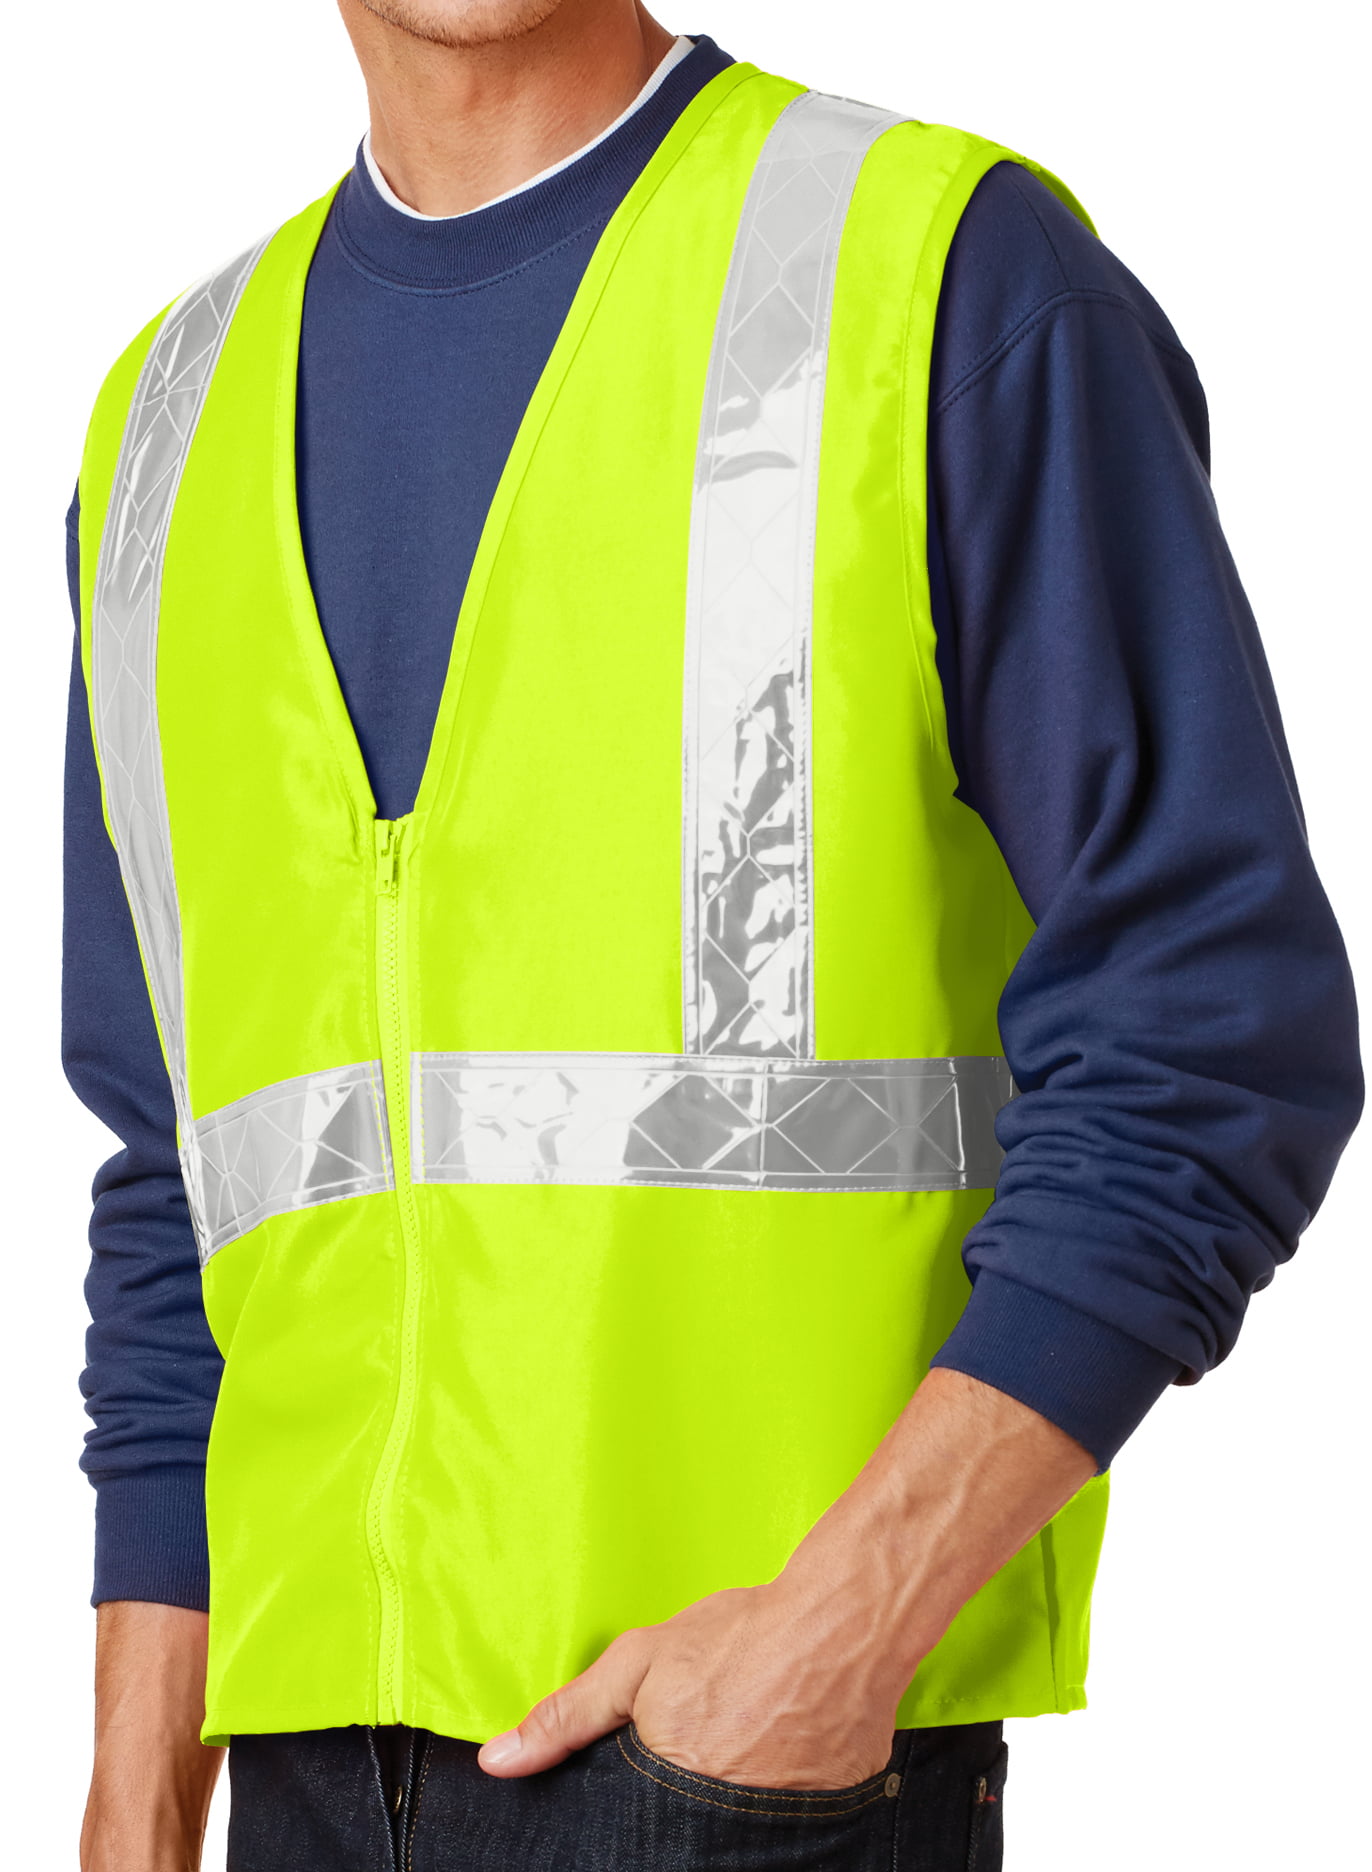 Mens High Visibility Safety Work Vest - Safety Yellow, 2XL/3XL - Walmart.com